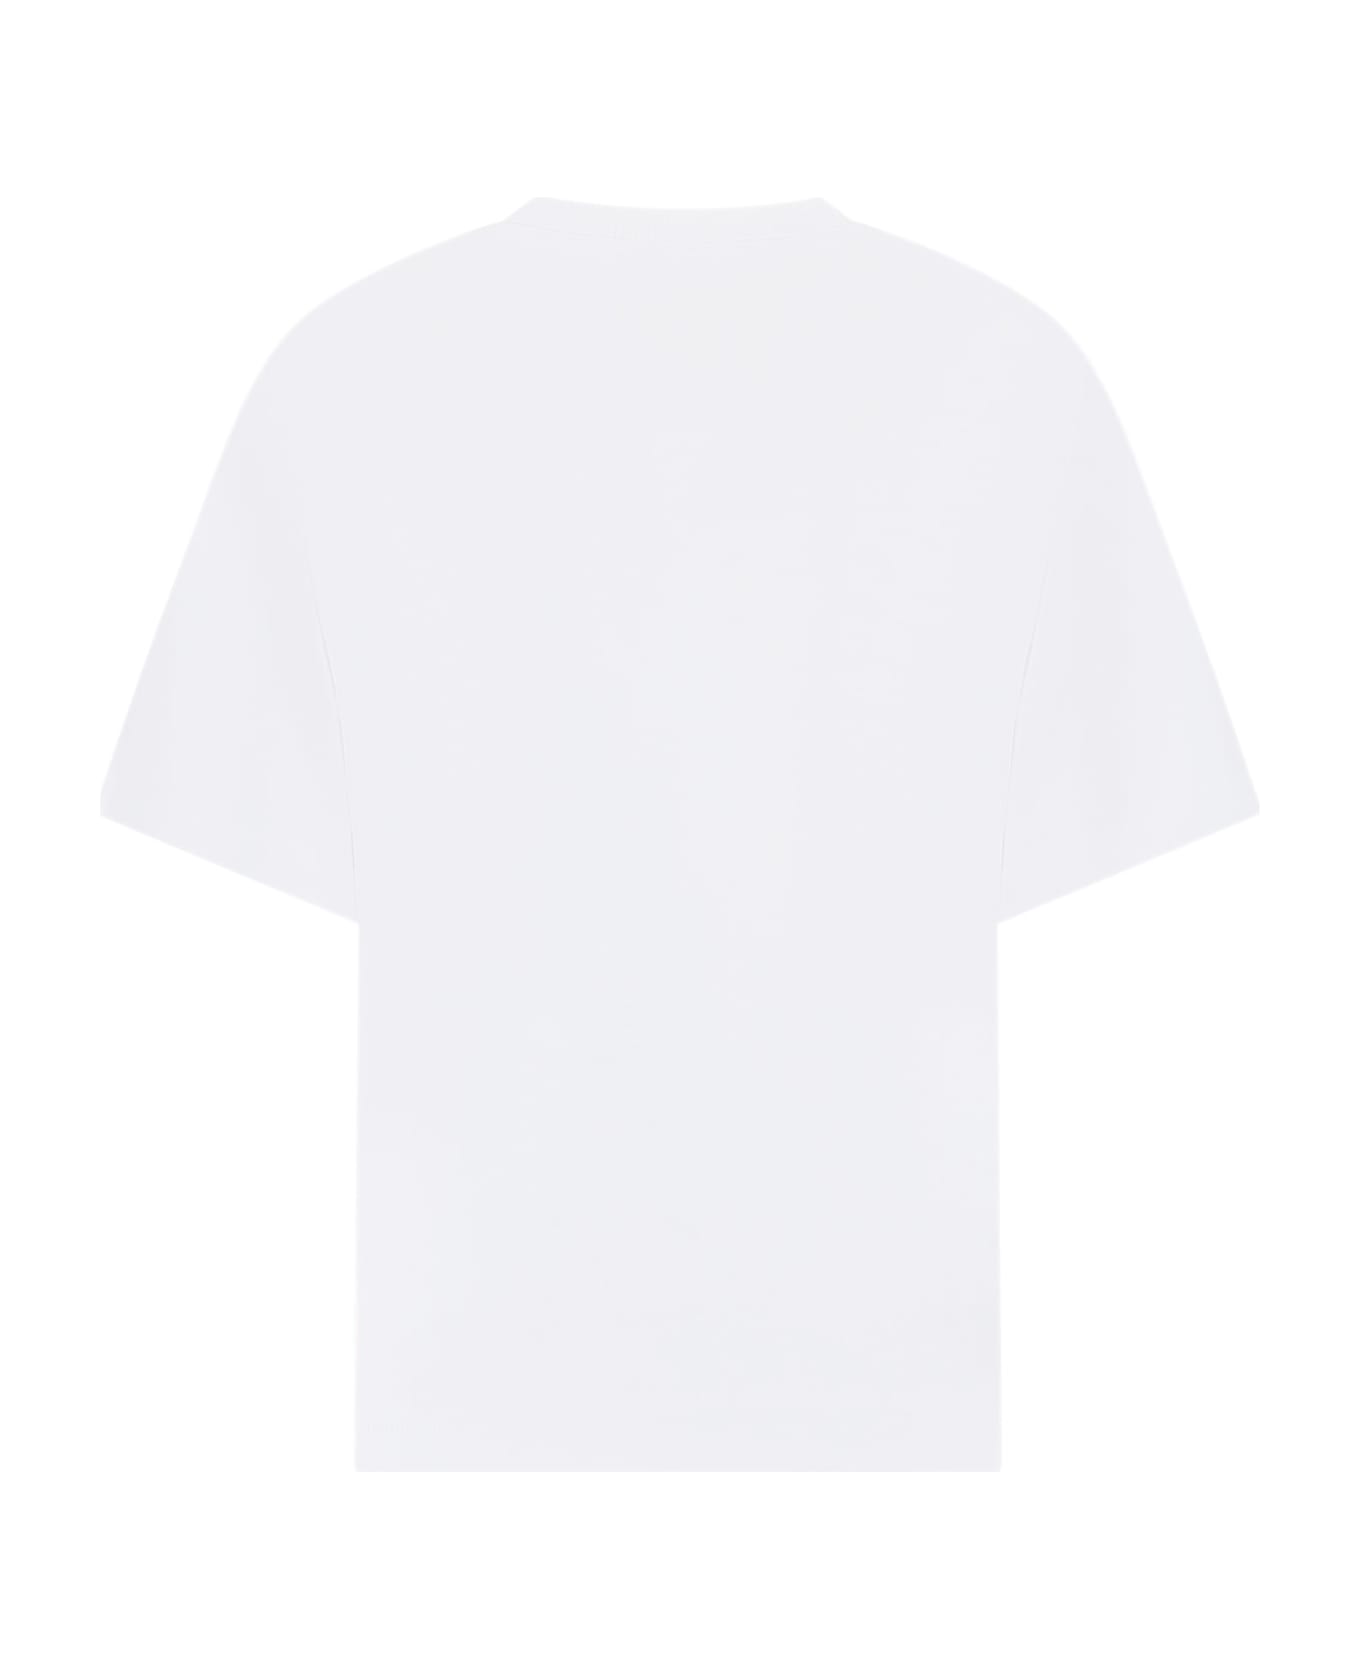 Emporio Armani White T-shirt For Boy With Smurf Print - White